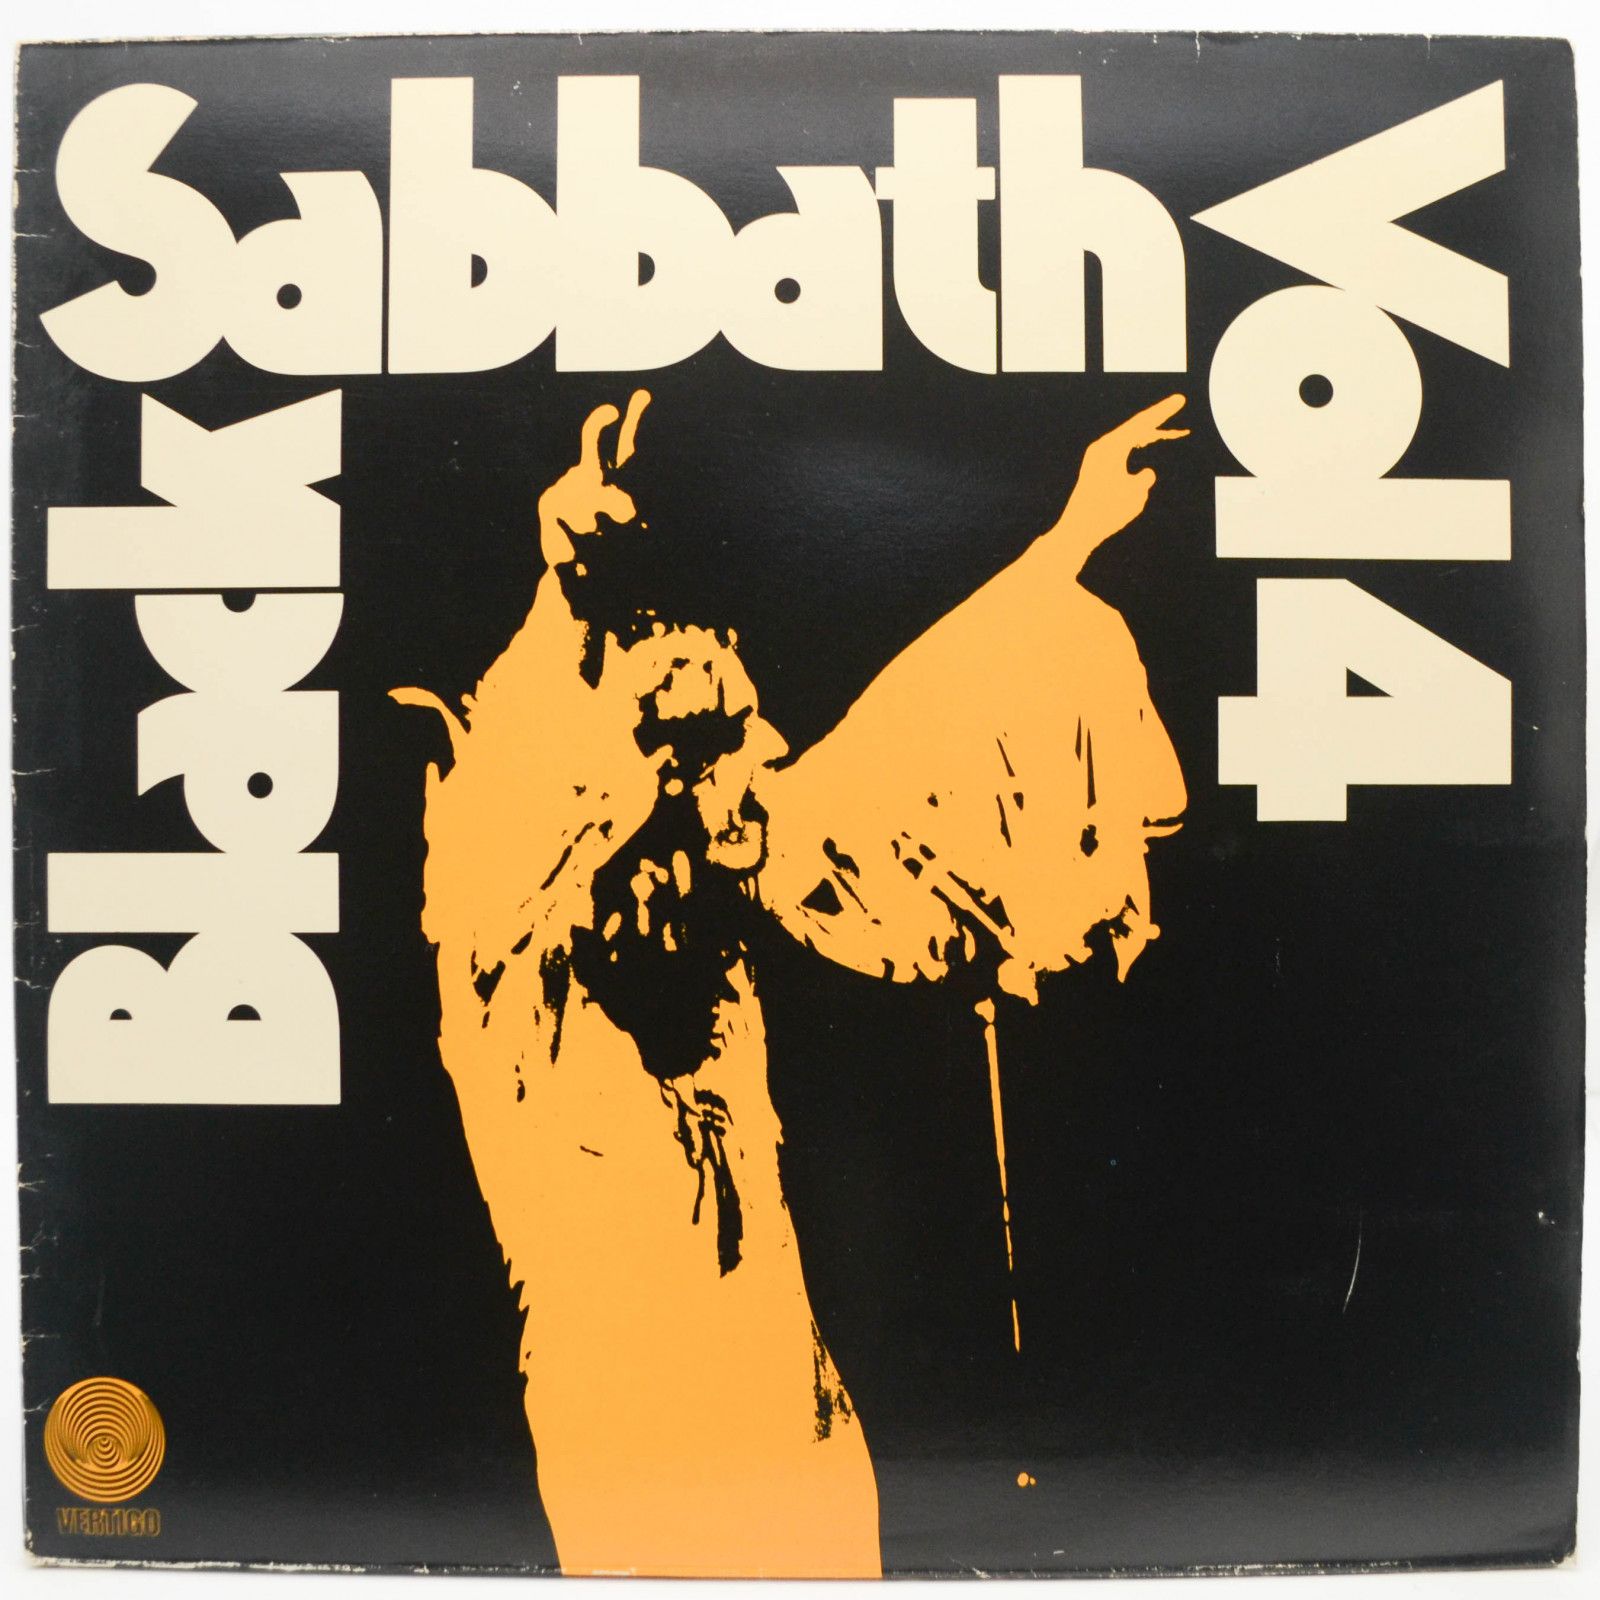 Black Sabbath — Black Sabbath Vol 4 (Vertigo swirl), 1972